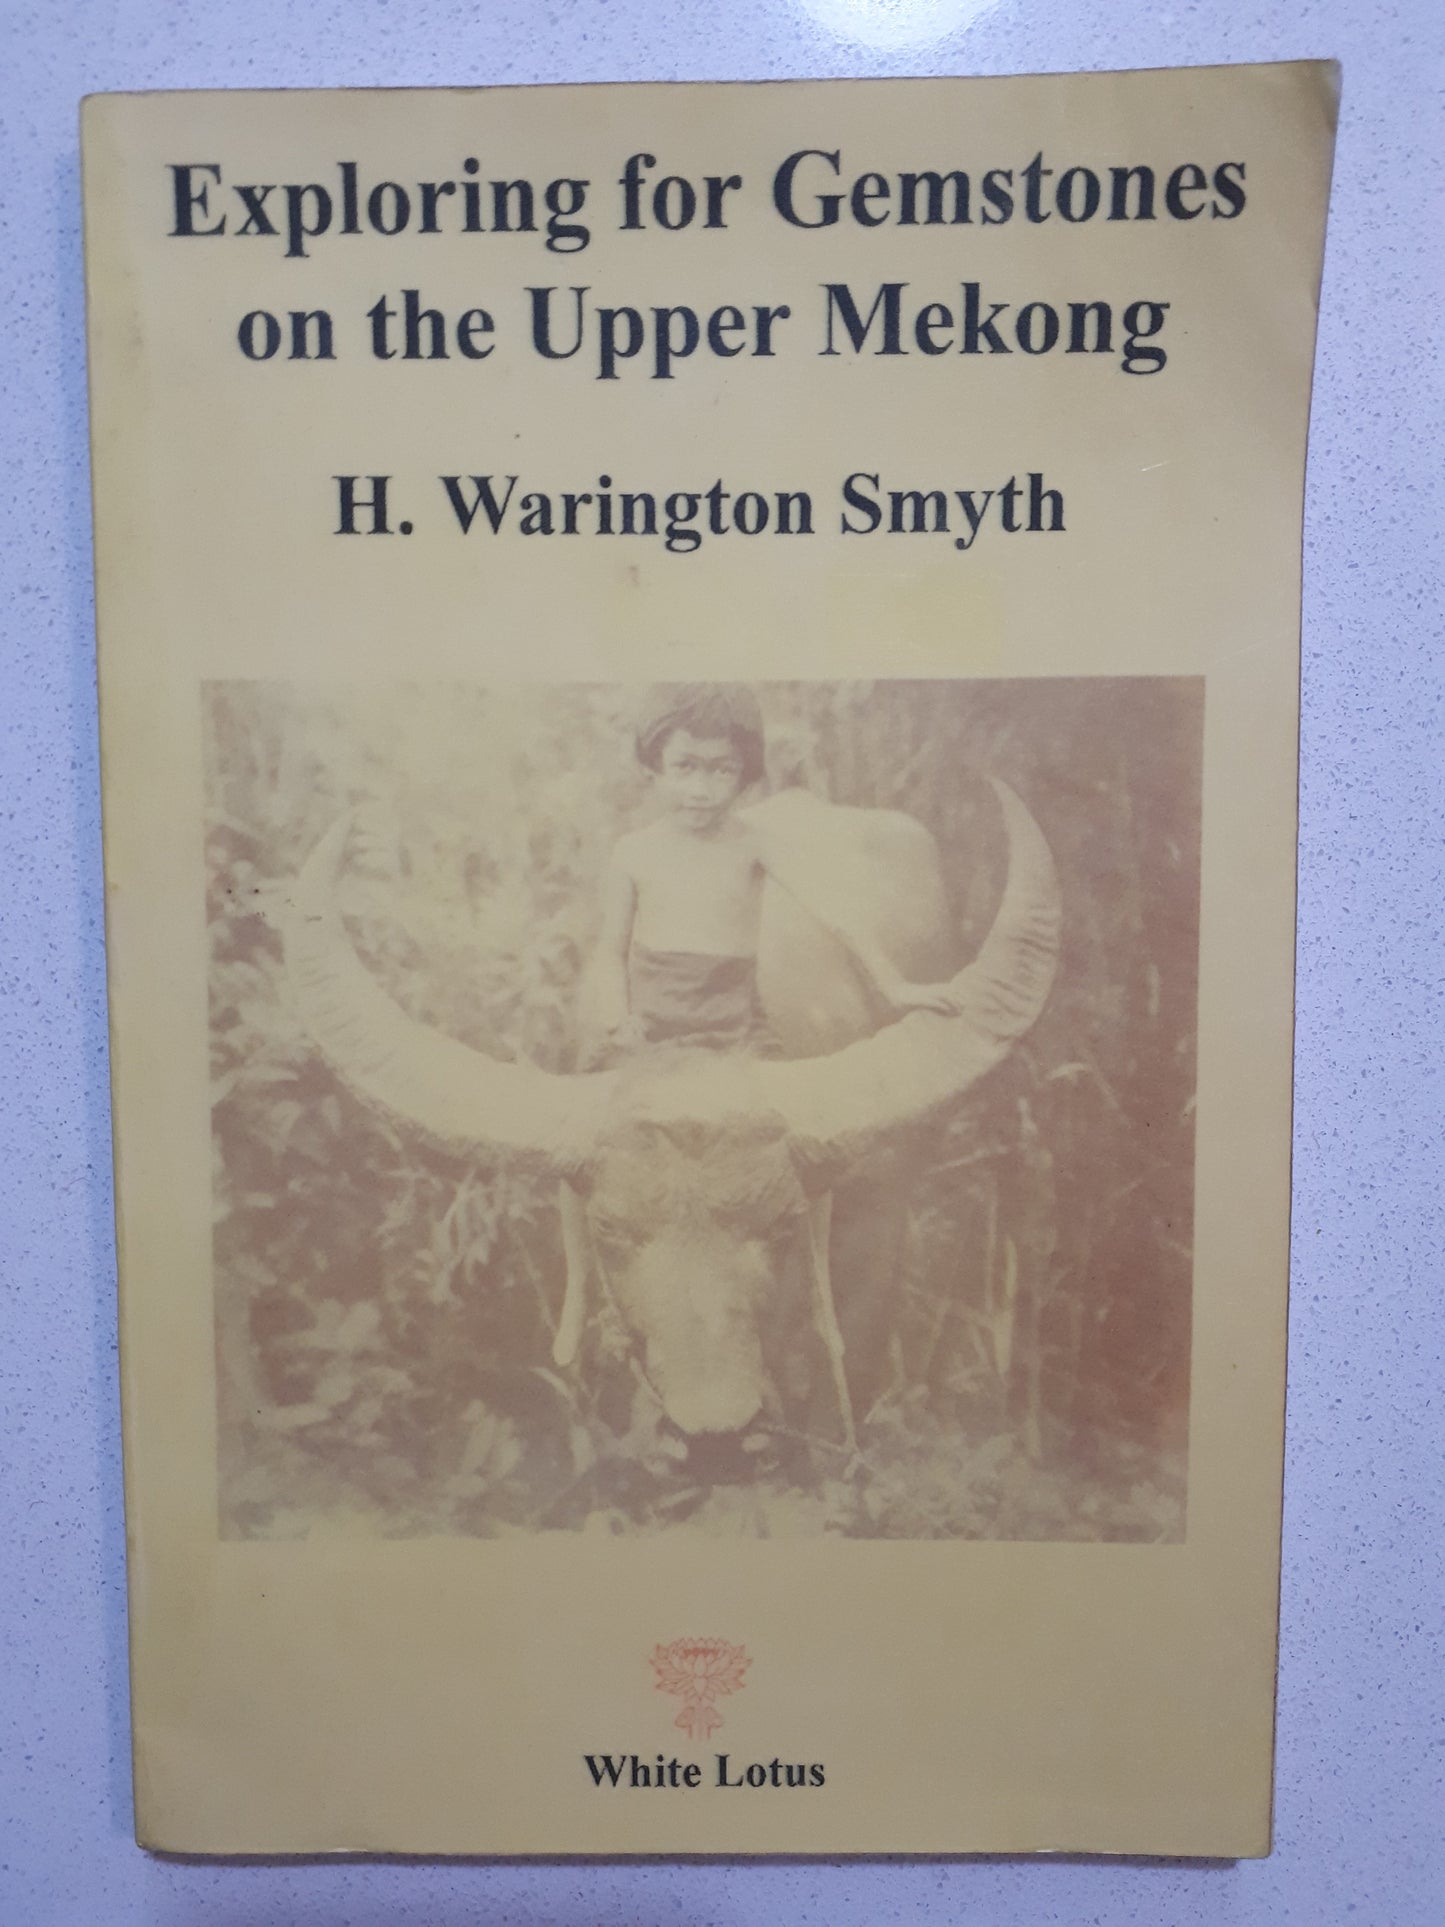 Exploring for Gemstones on the Upper Mekong by H. Warington Smyth